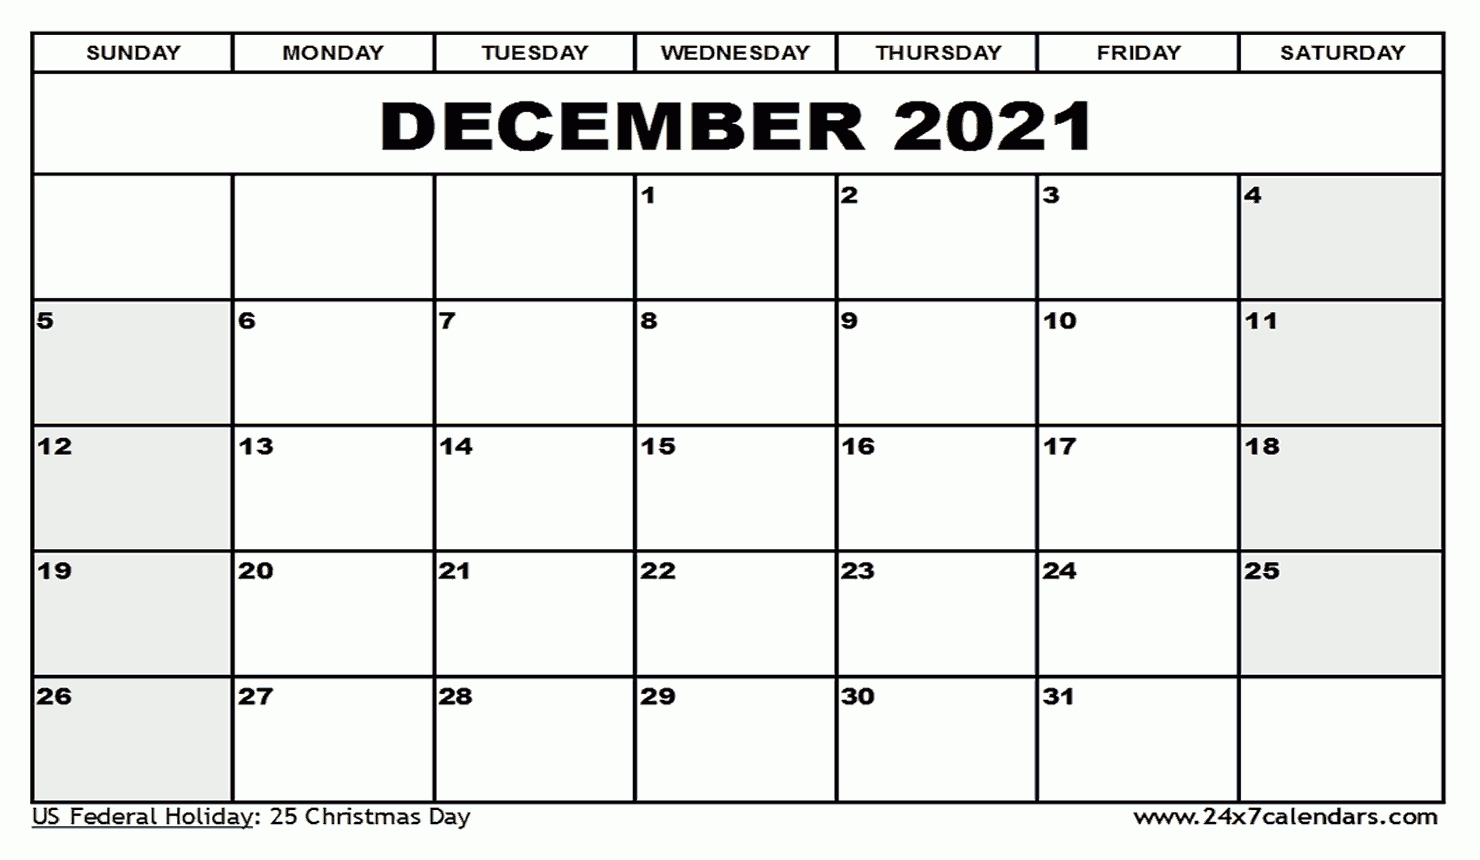 Free Printable December 2021 Calendar : 24X7Calendars Free Printable December 2021 Calendar With Holidays